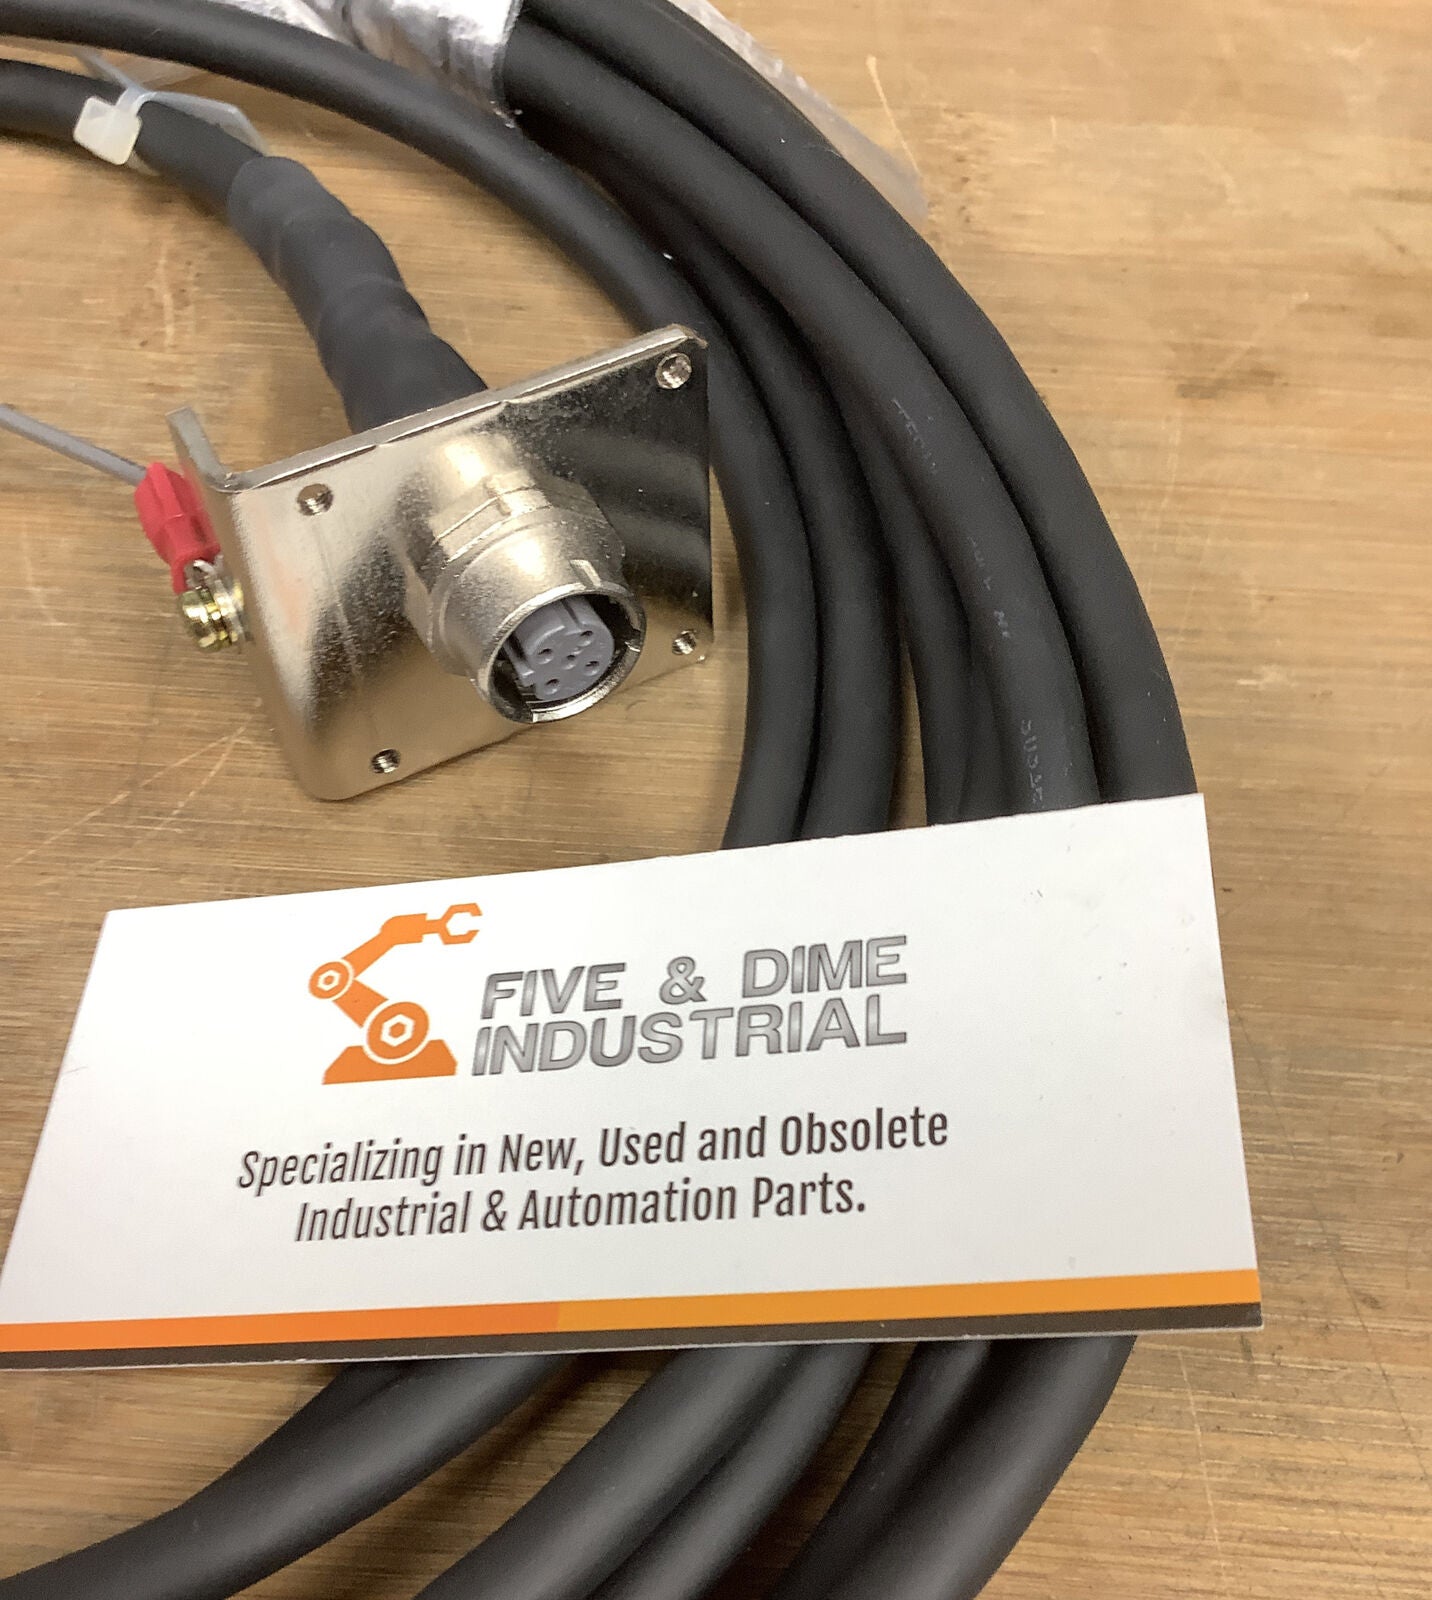 Fanuc A05B-1333-D009 New Cable K614 PNS 7 Meters  (CBL118)